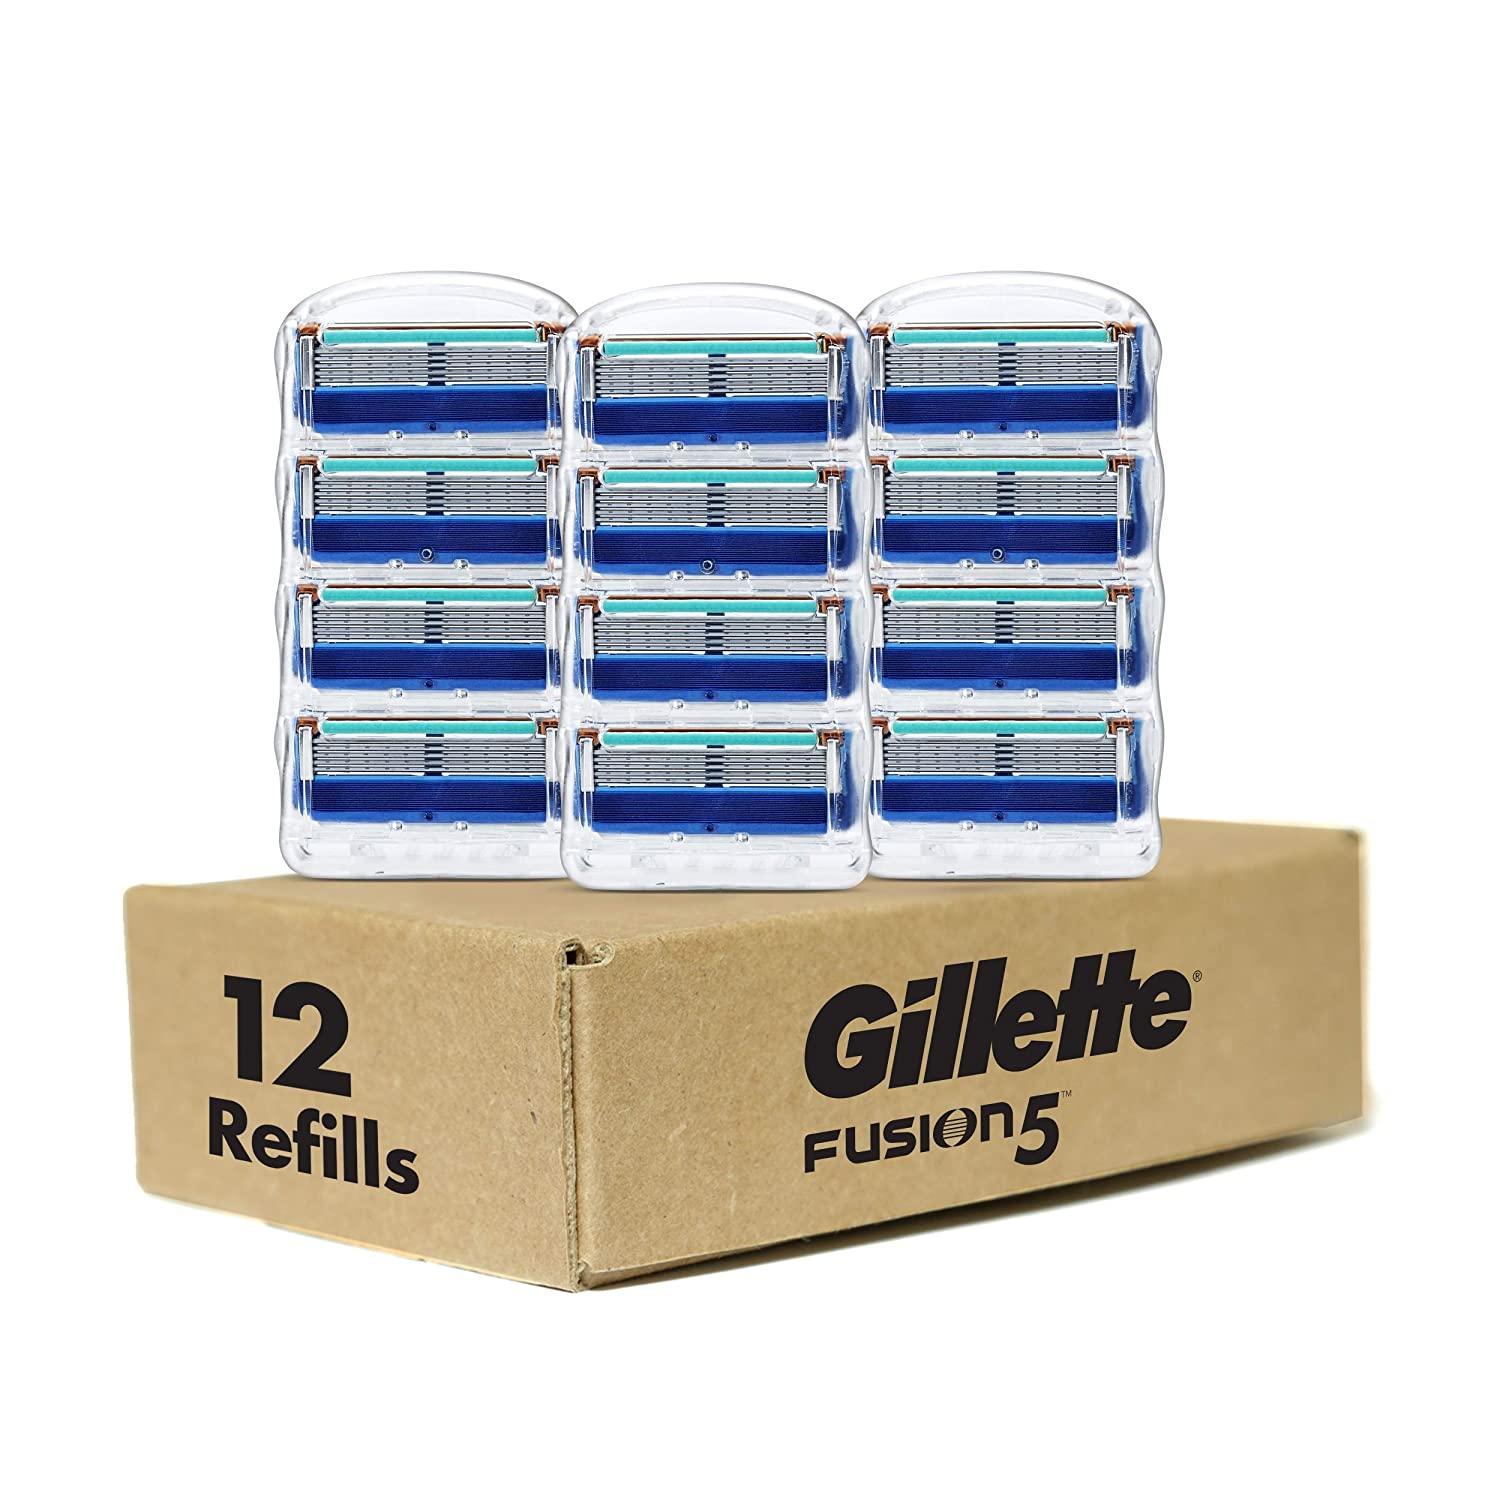 12 Gillette Fusion Manual Mens Razor Blade Refills for $22.60 Shipped